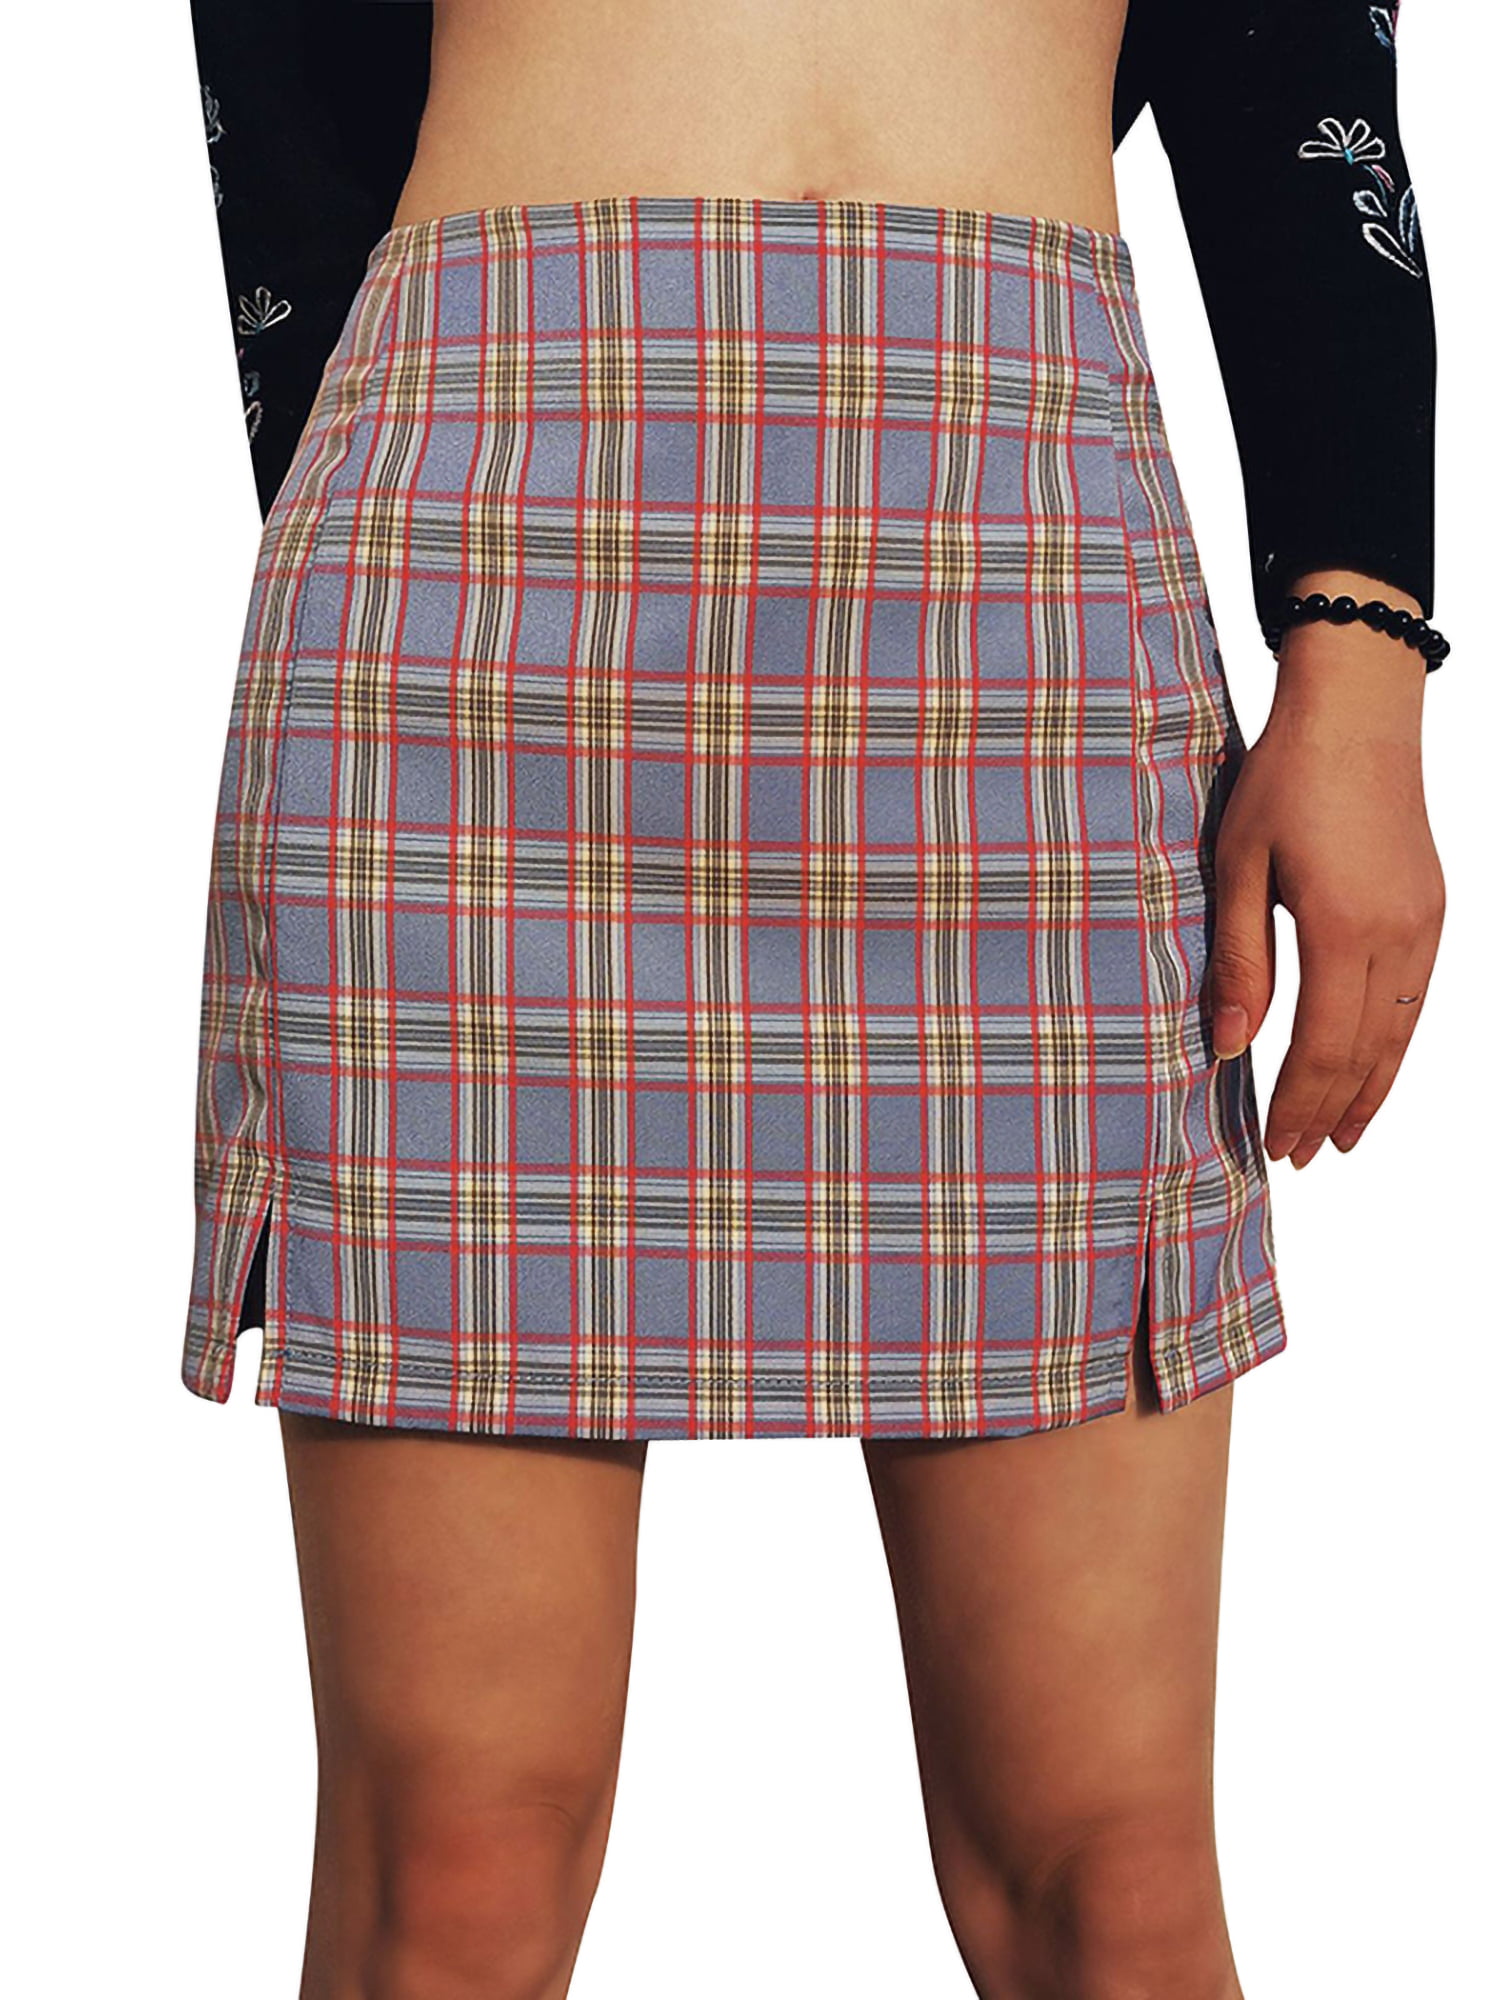 Women Denim Side Lace Up Hollow Out Fashion Pencil Short wear Casual Mini Skirt 